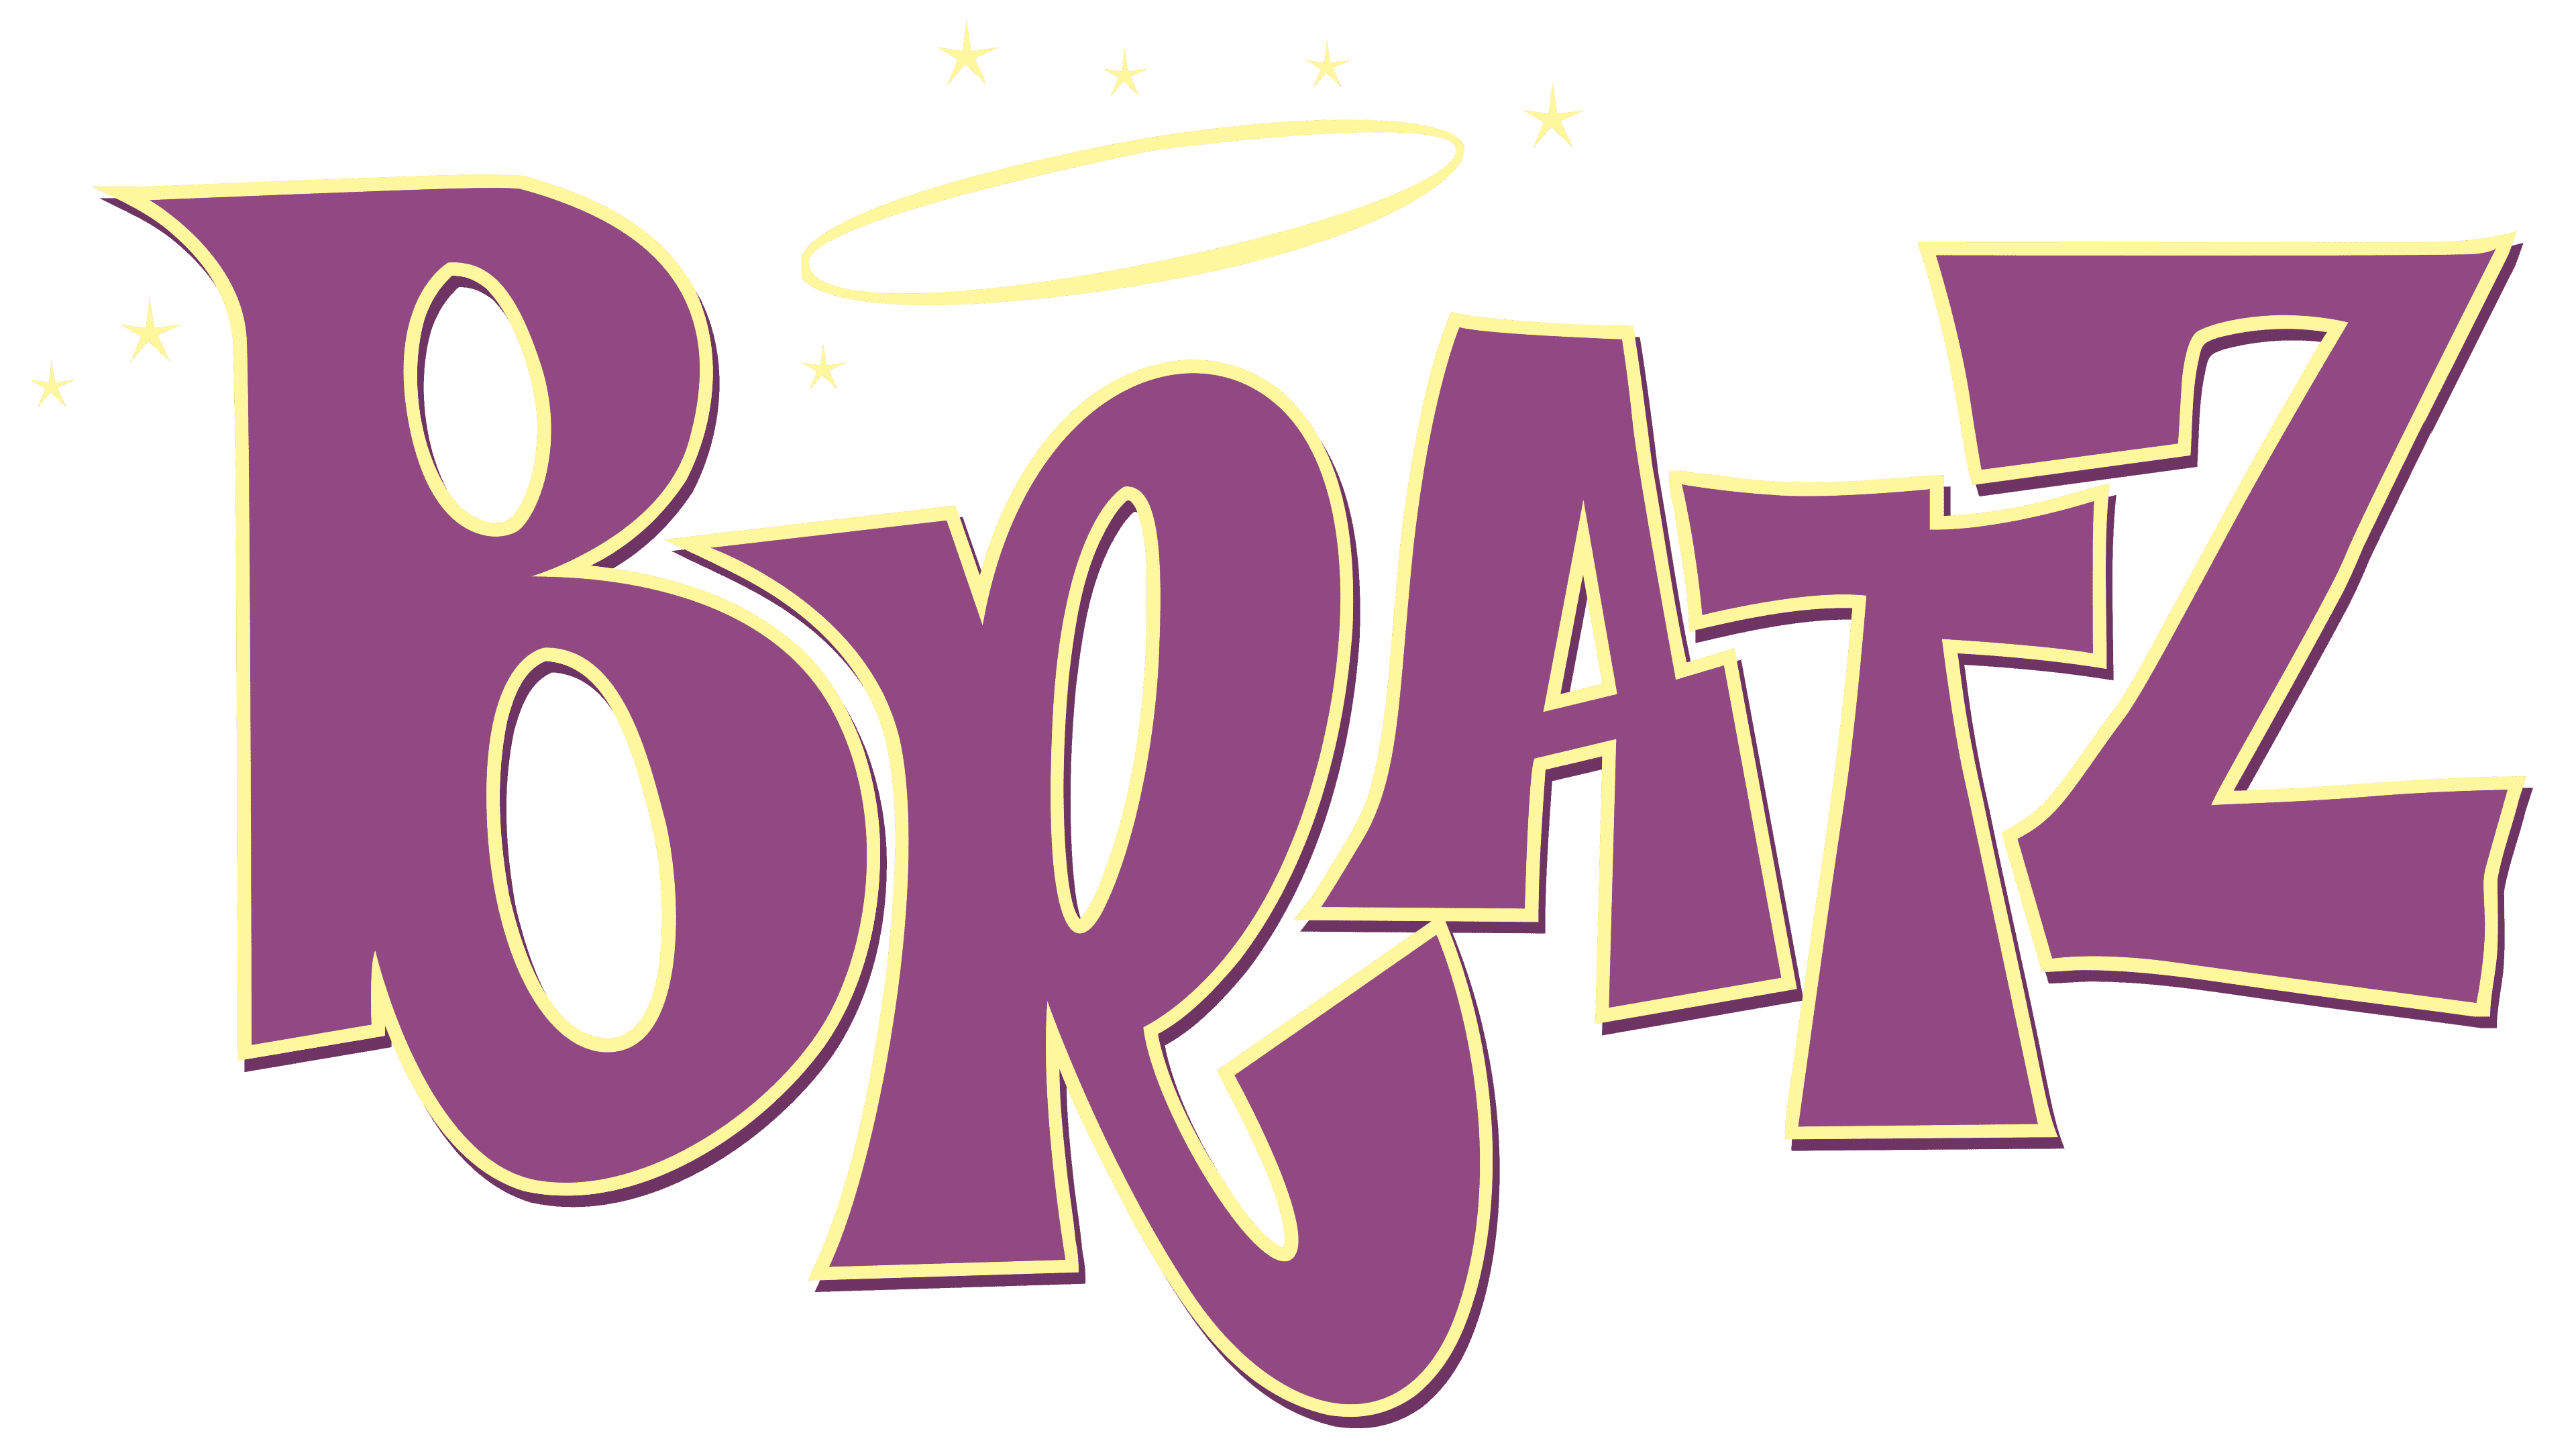 Bratz Logo PNG Photos